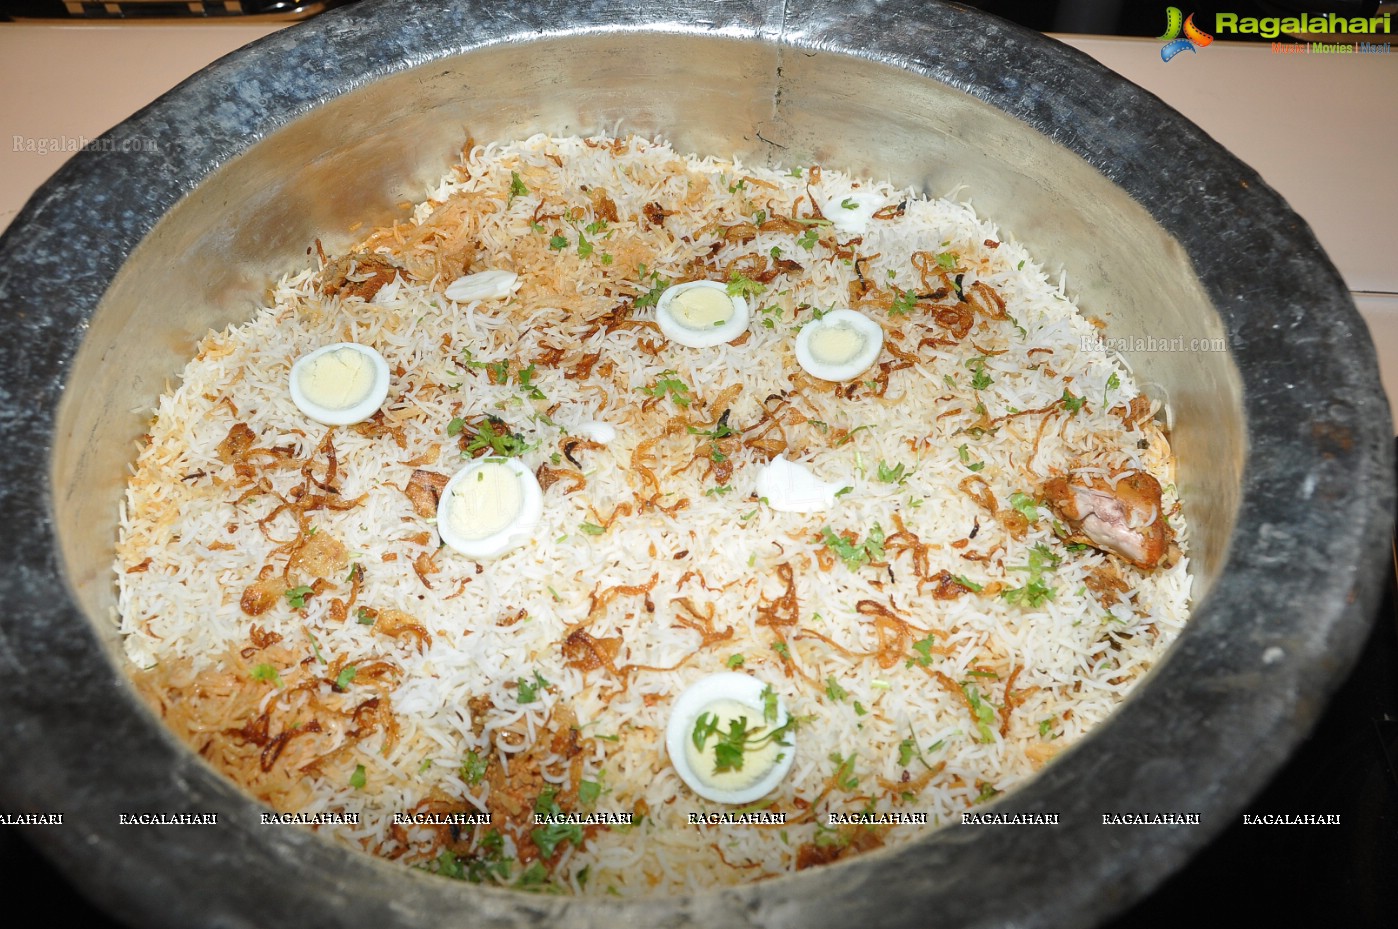 Sharad Sandhya - The Grand Bengali Food Festival at Green Park, Hyderabad